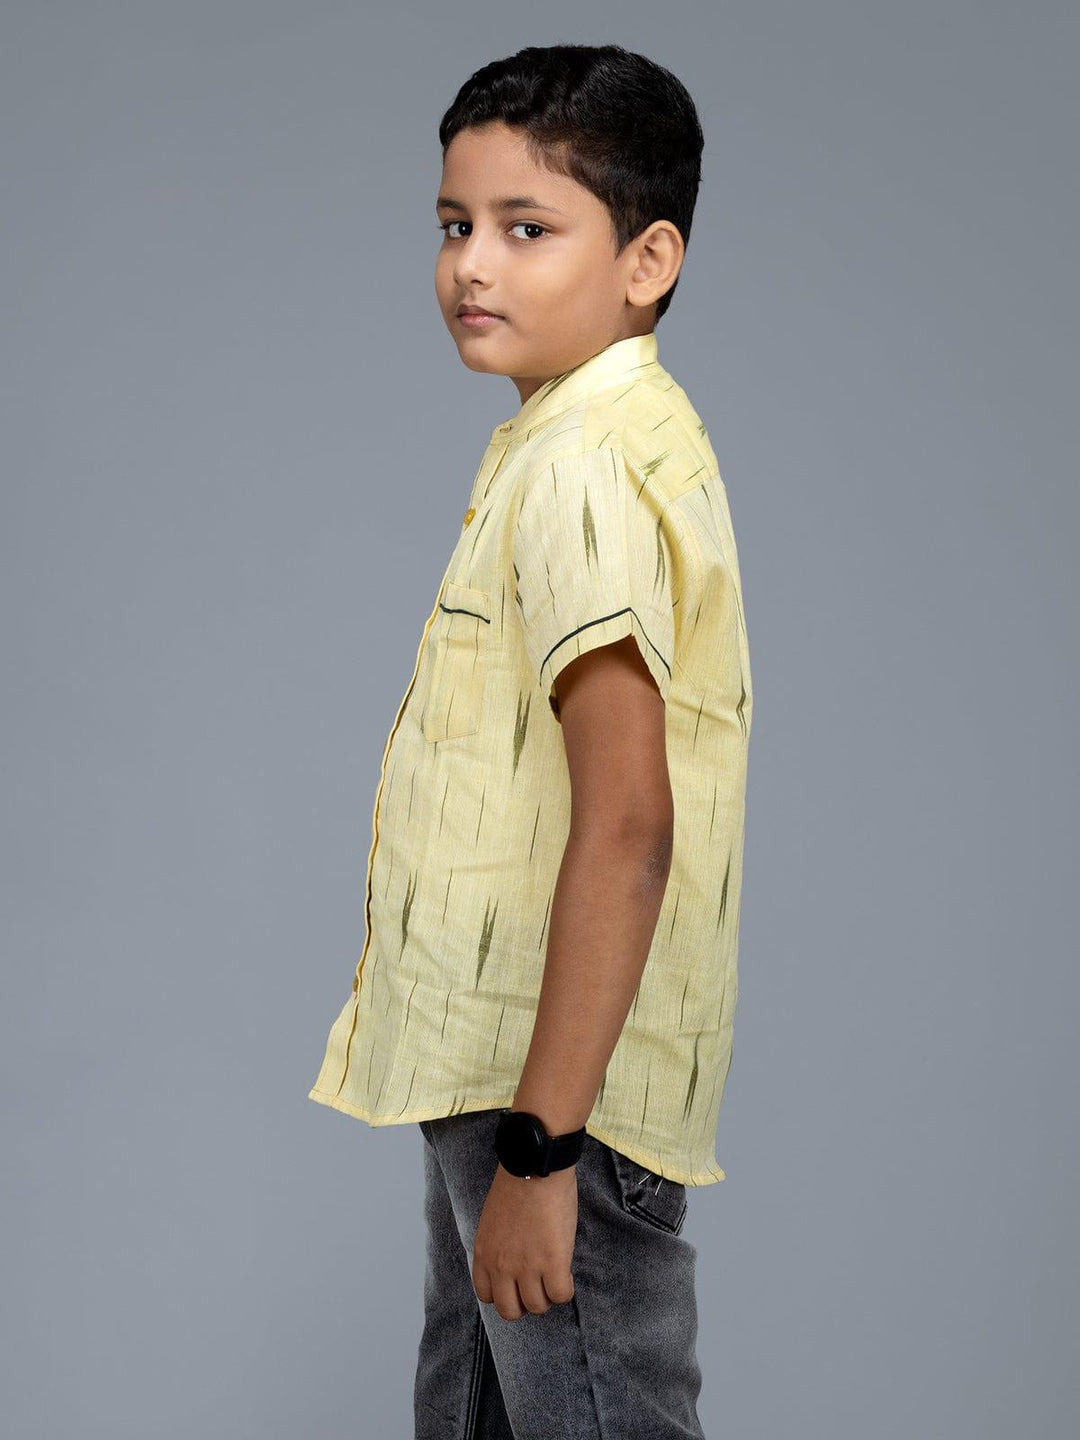 Handwoven Cotton Light Yellow Boys Shirt - WeaversIndia